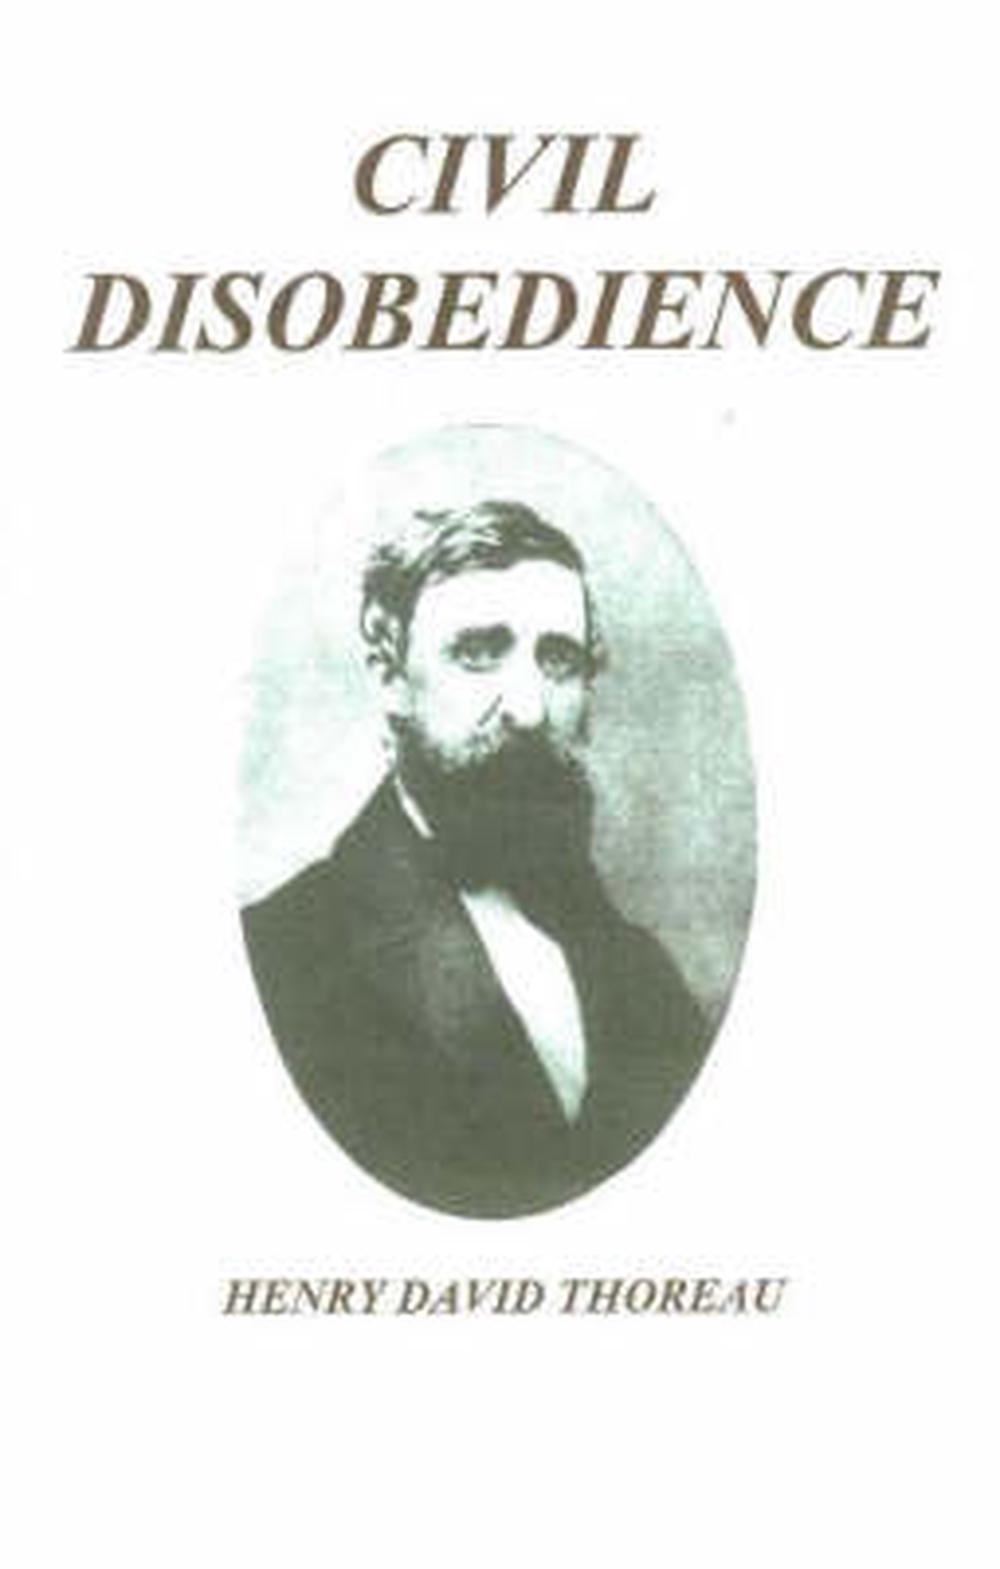 Thoreau essay on civil disobedience